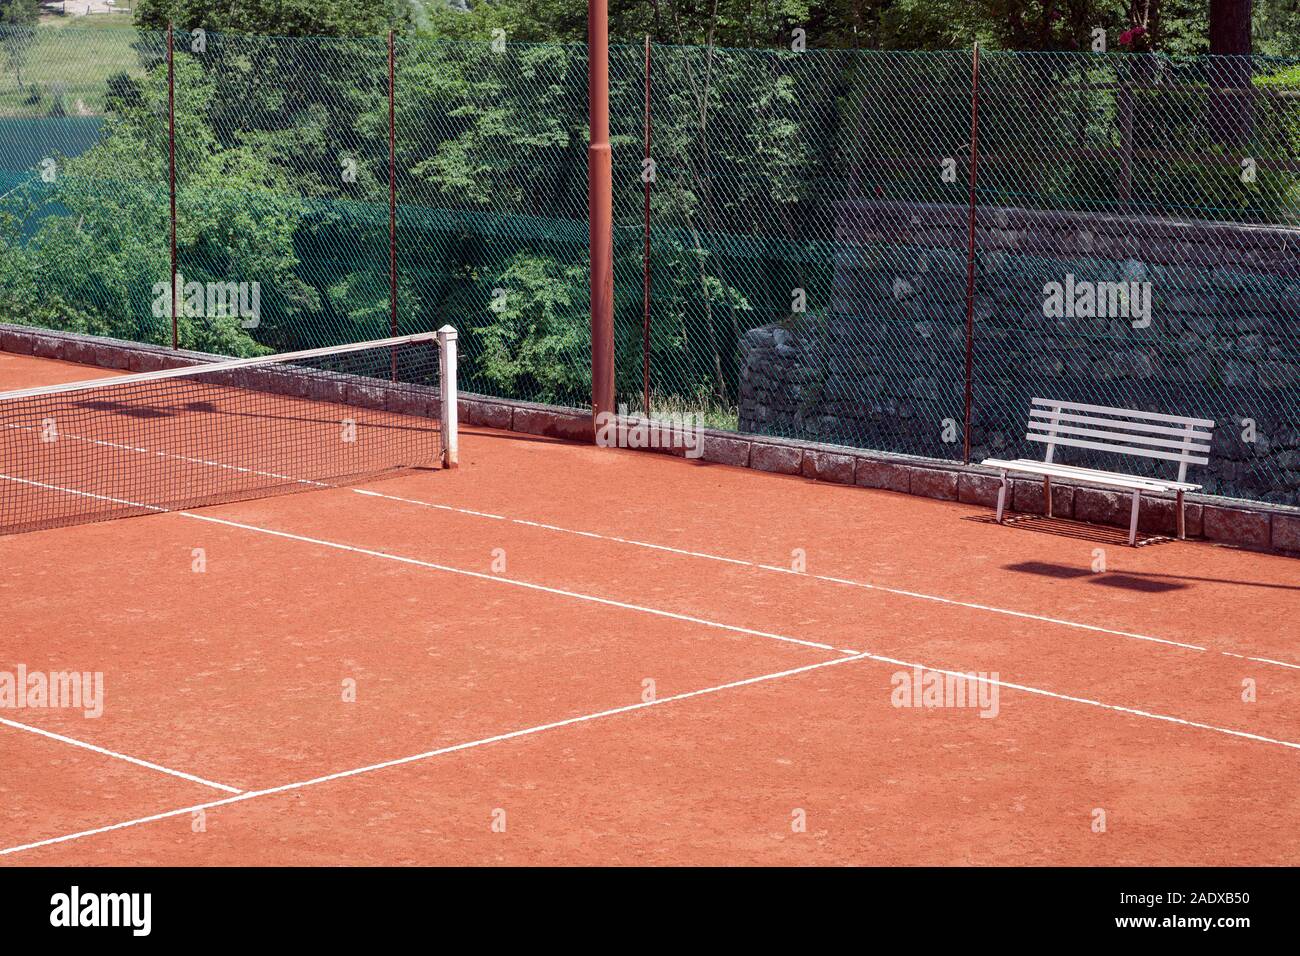 campo da tennis in terra rossa in una zona montana Foto Stock